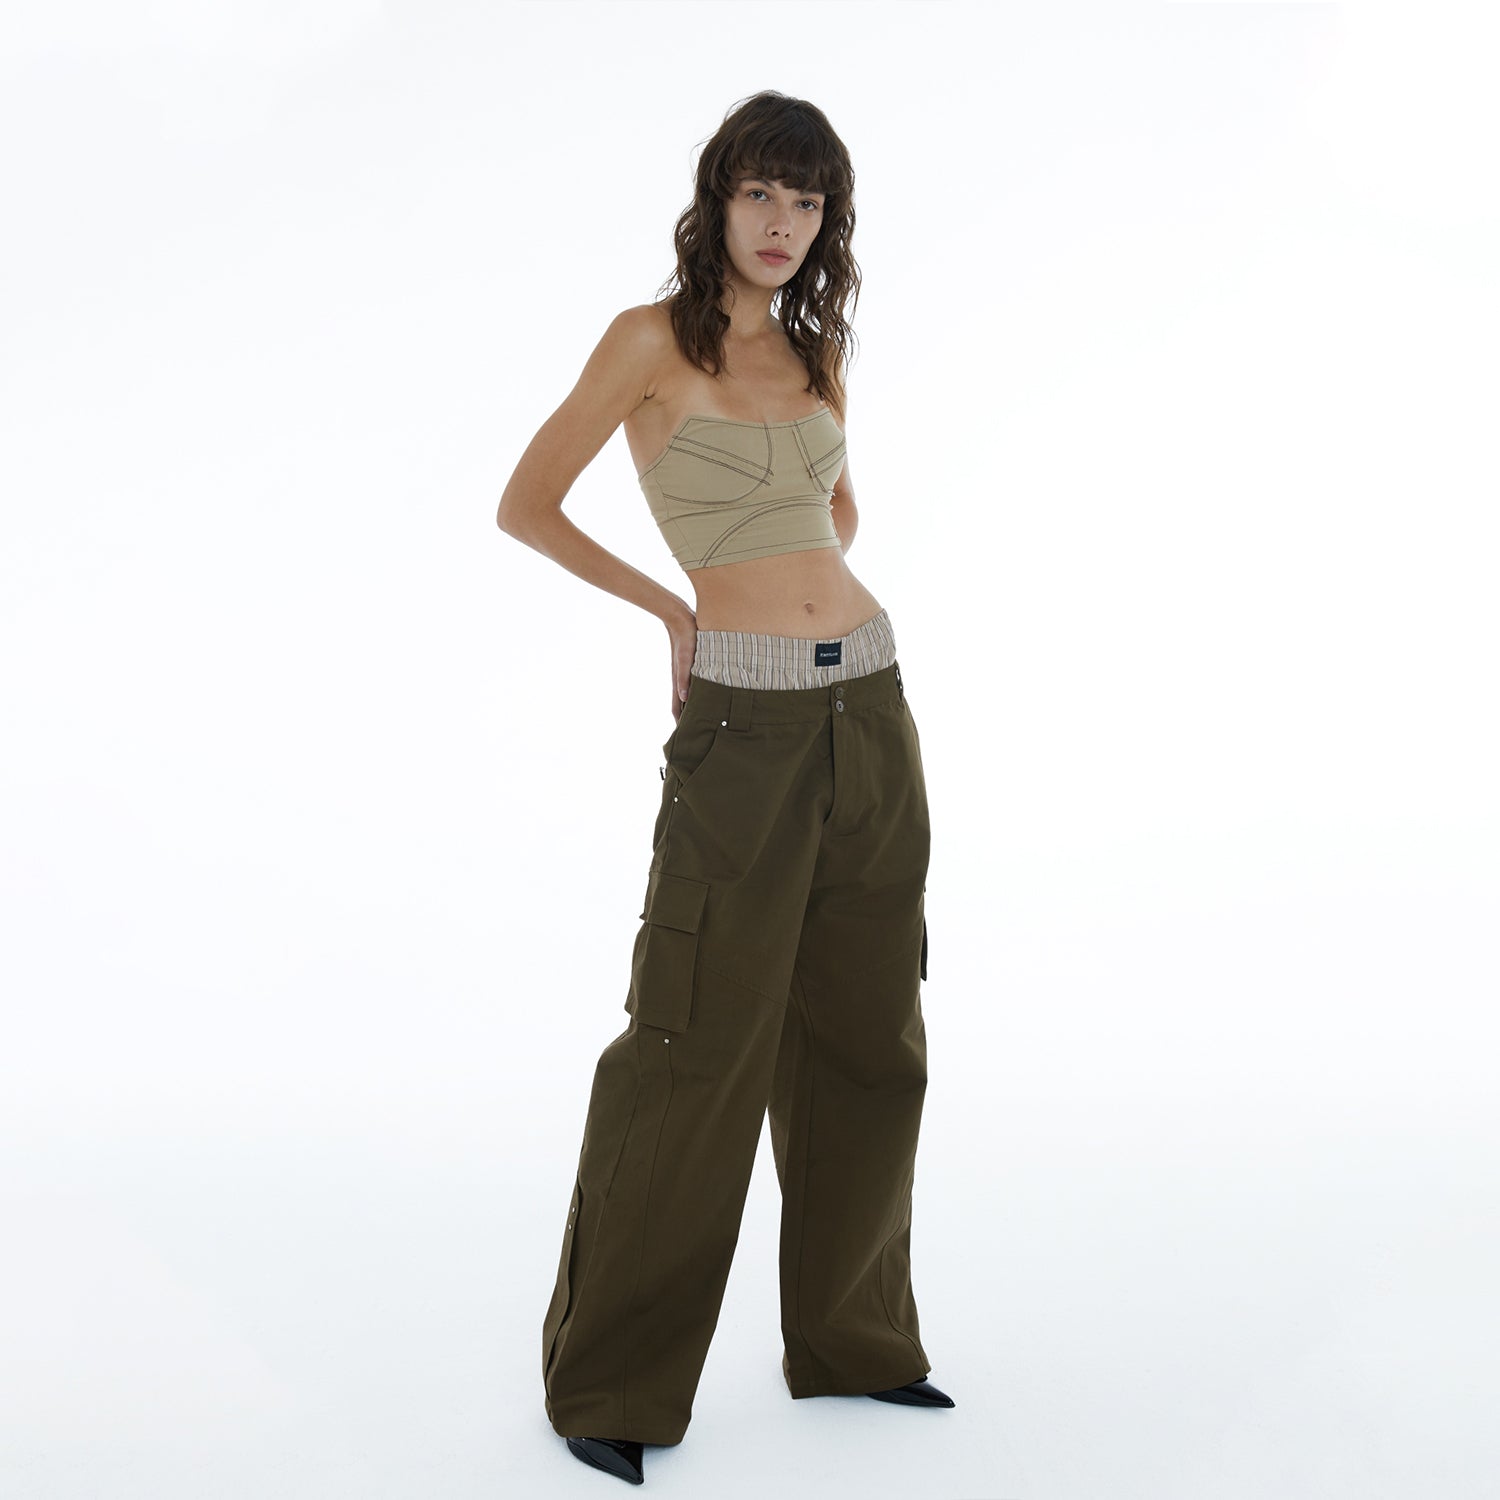 Buy Babes Loose Multi-pocket Lounge Pants by Body404